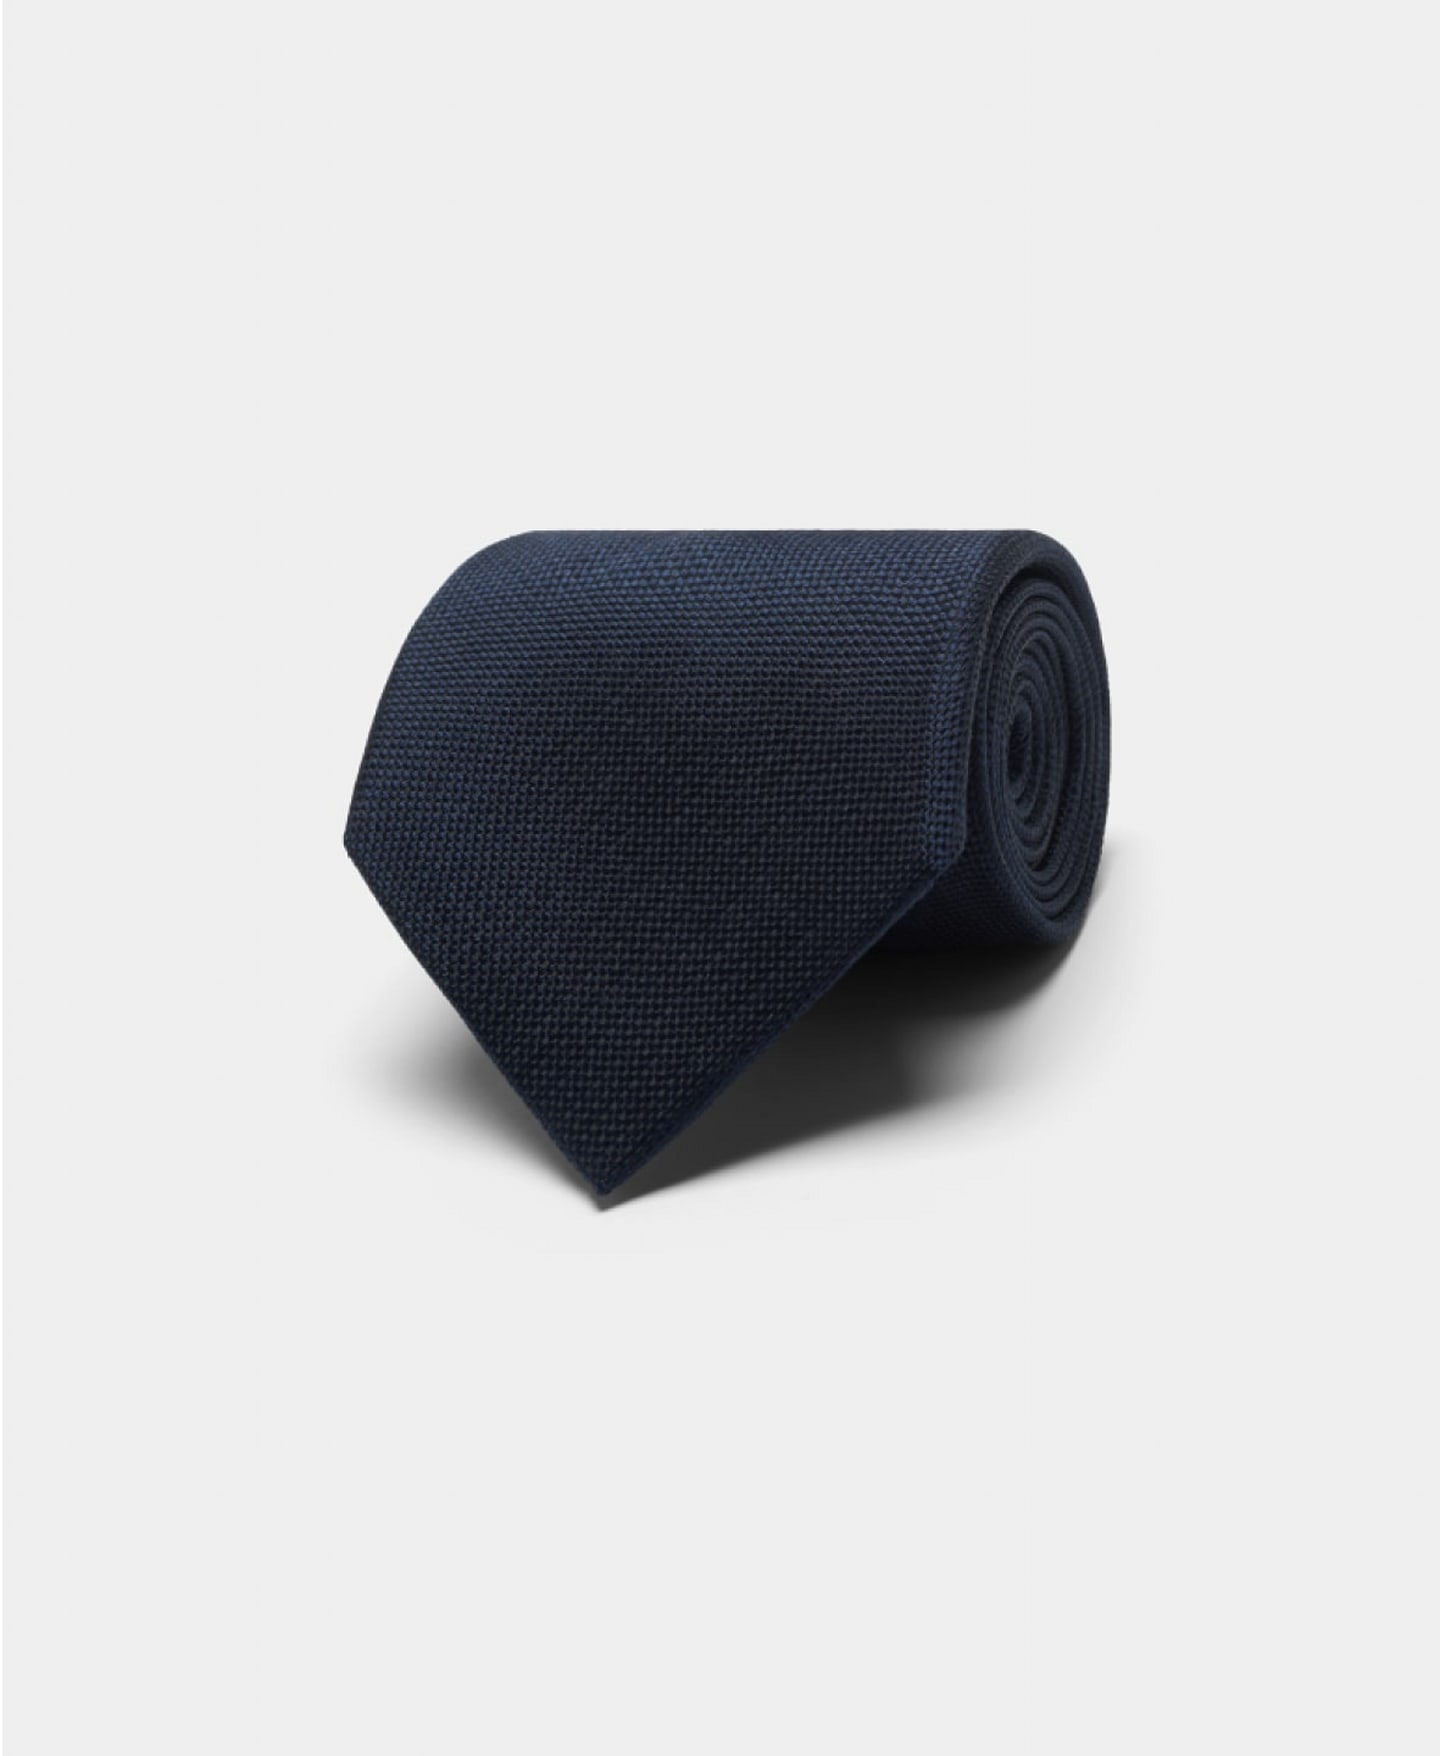 Cravate en pure soie bleu marine.